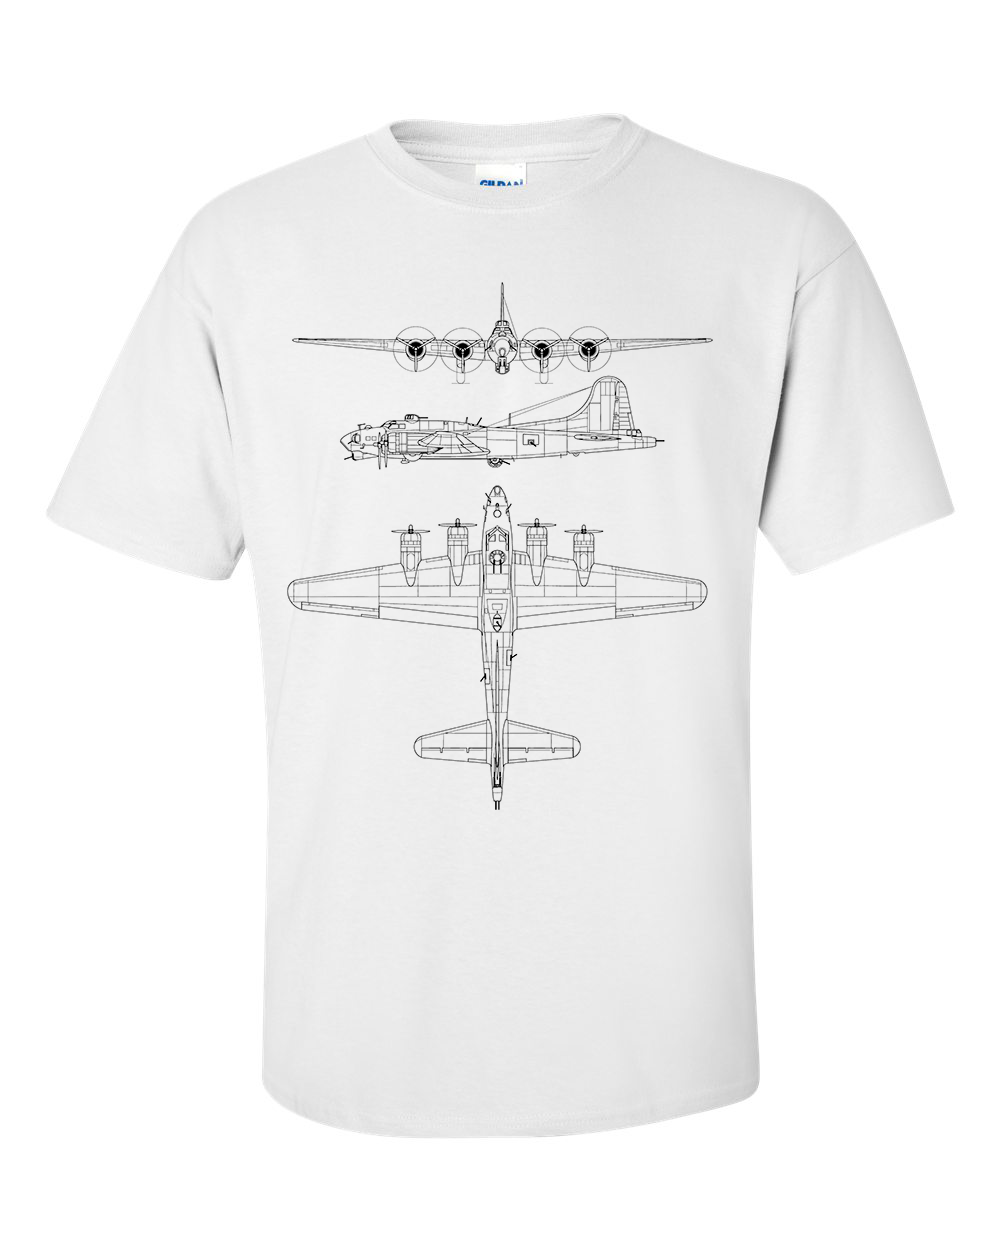 B-17 Flying Fortress T-Shirt Technical Drawing Blueprint Aircraft USAF WW2 Shirt